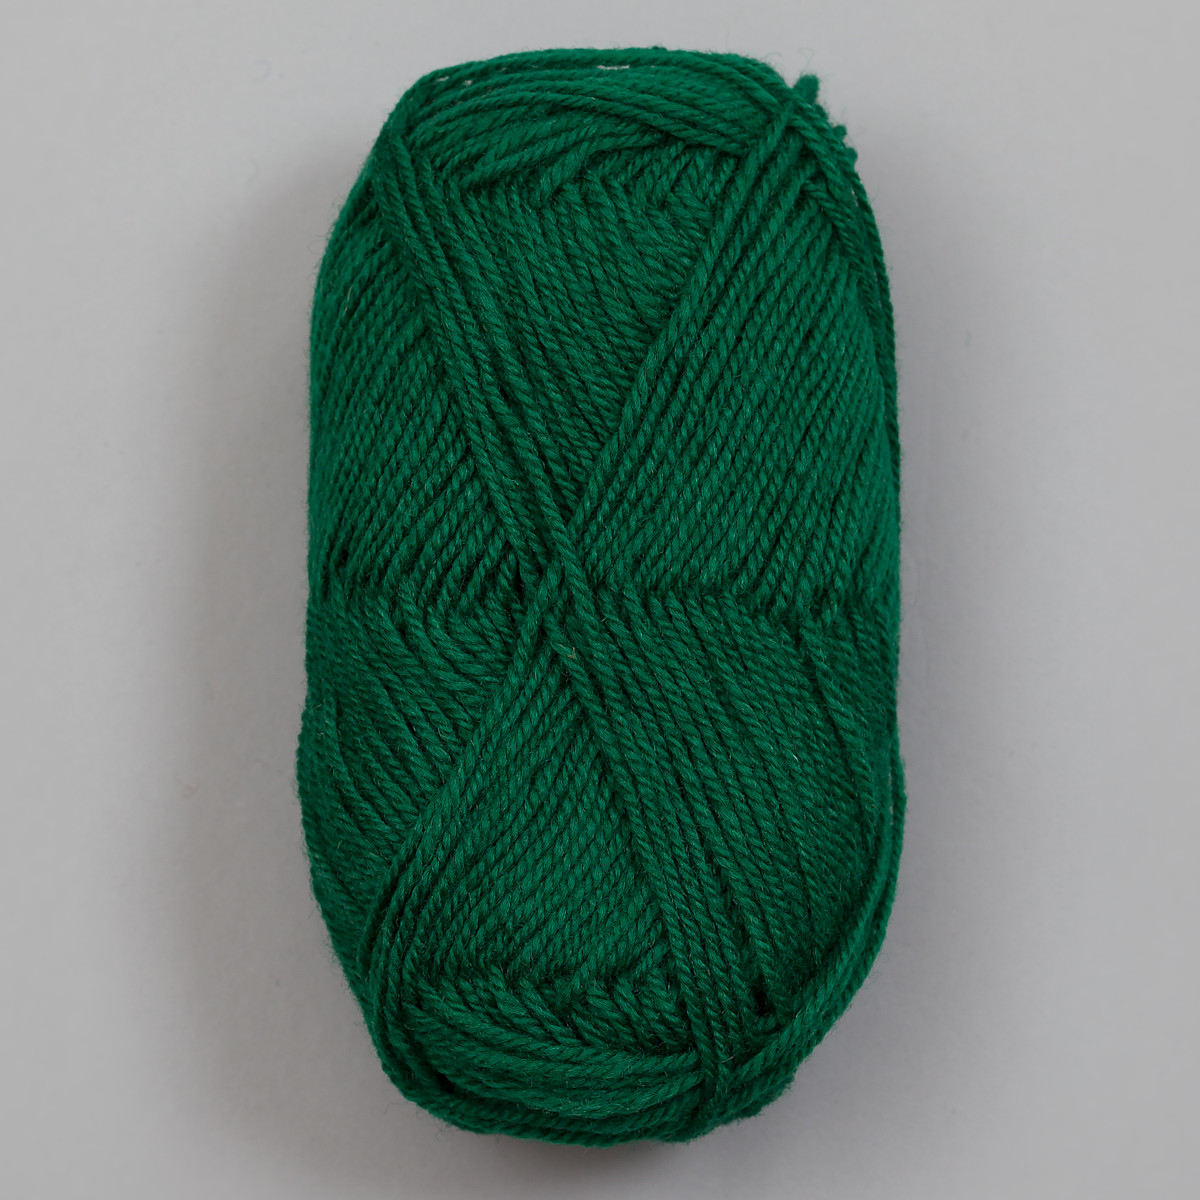 3-tråds strikkegarn - Mørk grønn (130)